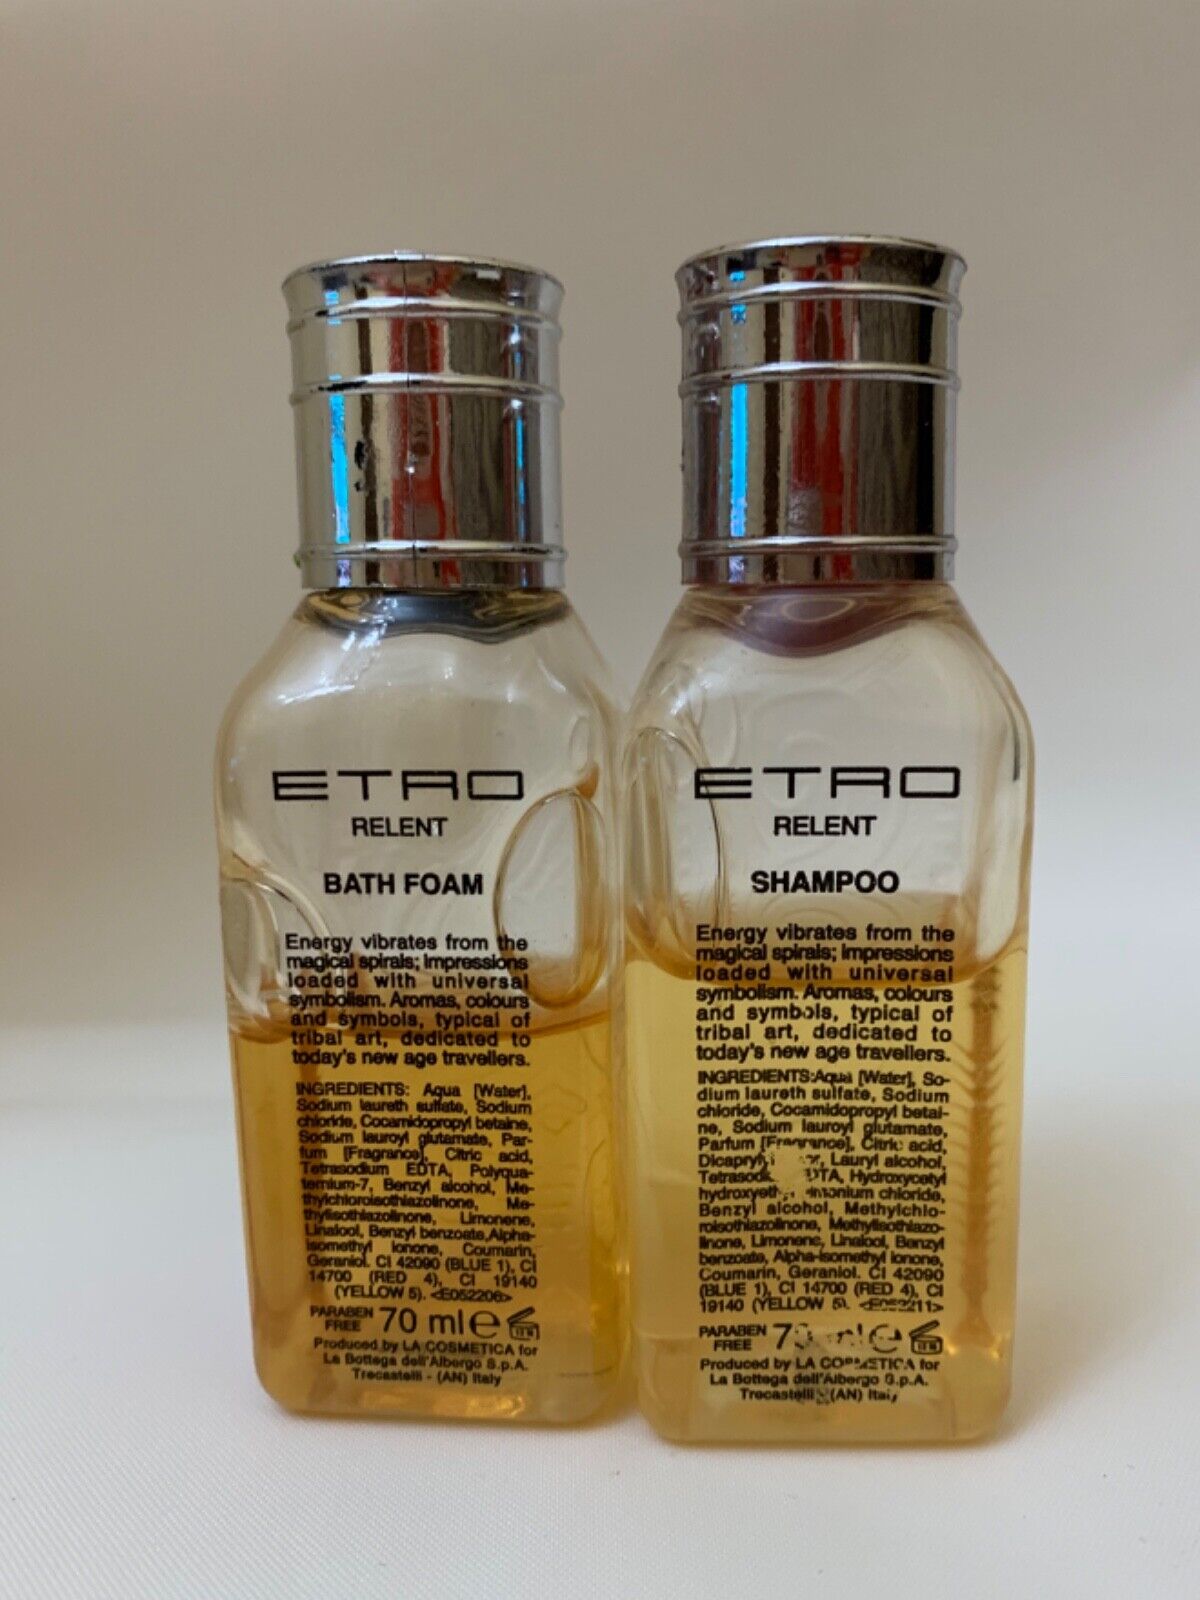 Etro Relent * Shampoo  37 ml left & Bath foam 36 ml left *  travel size 